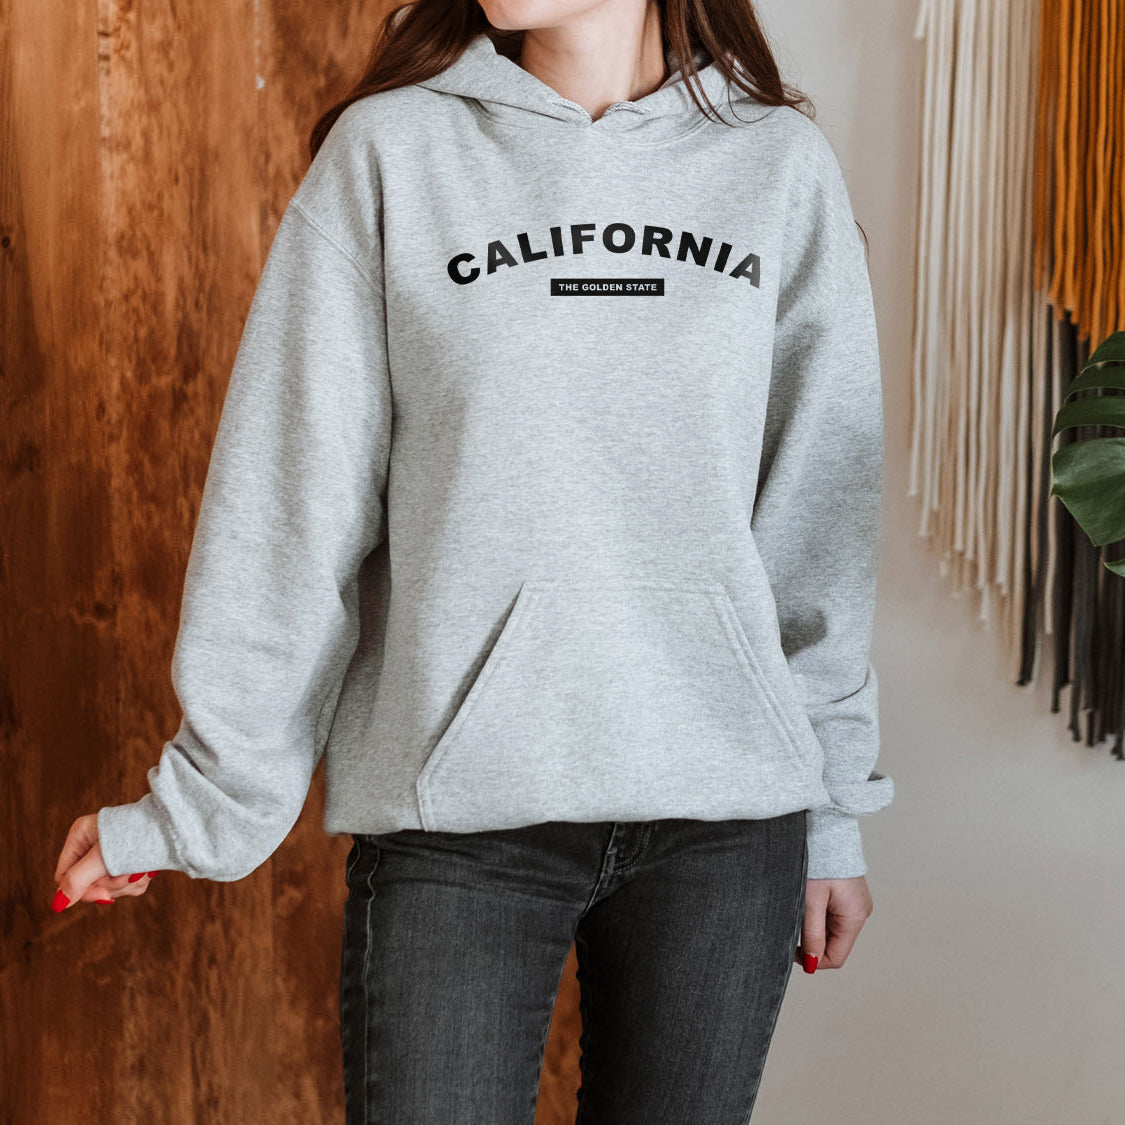 California The Golden State Hoodie - United States Name & Slogan Minimal Design Printed Hoodie